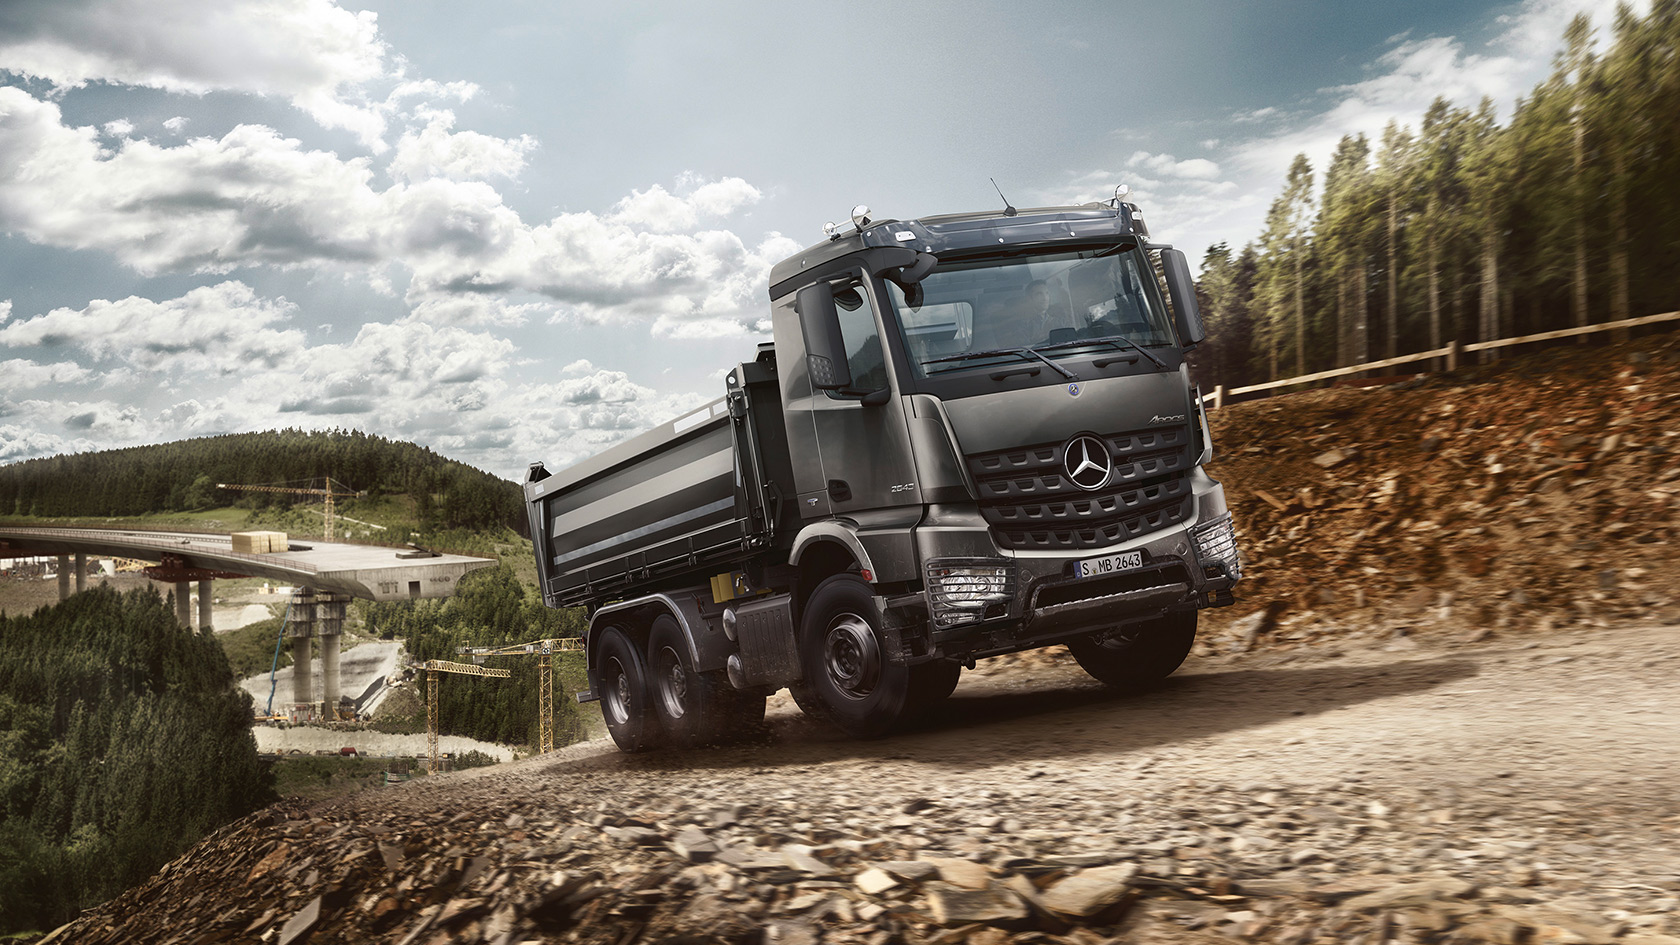 Arocs: Accessoires d'origine - Mercedes-Benz Trucks - Trucks you